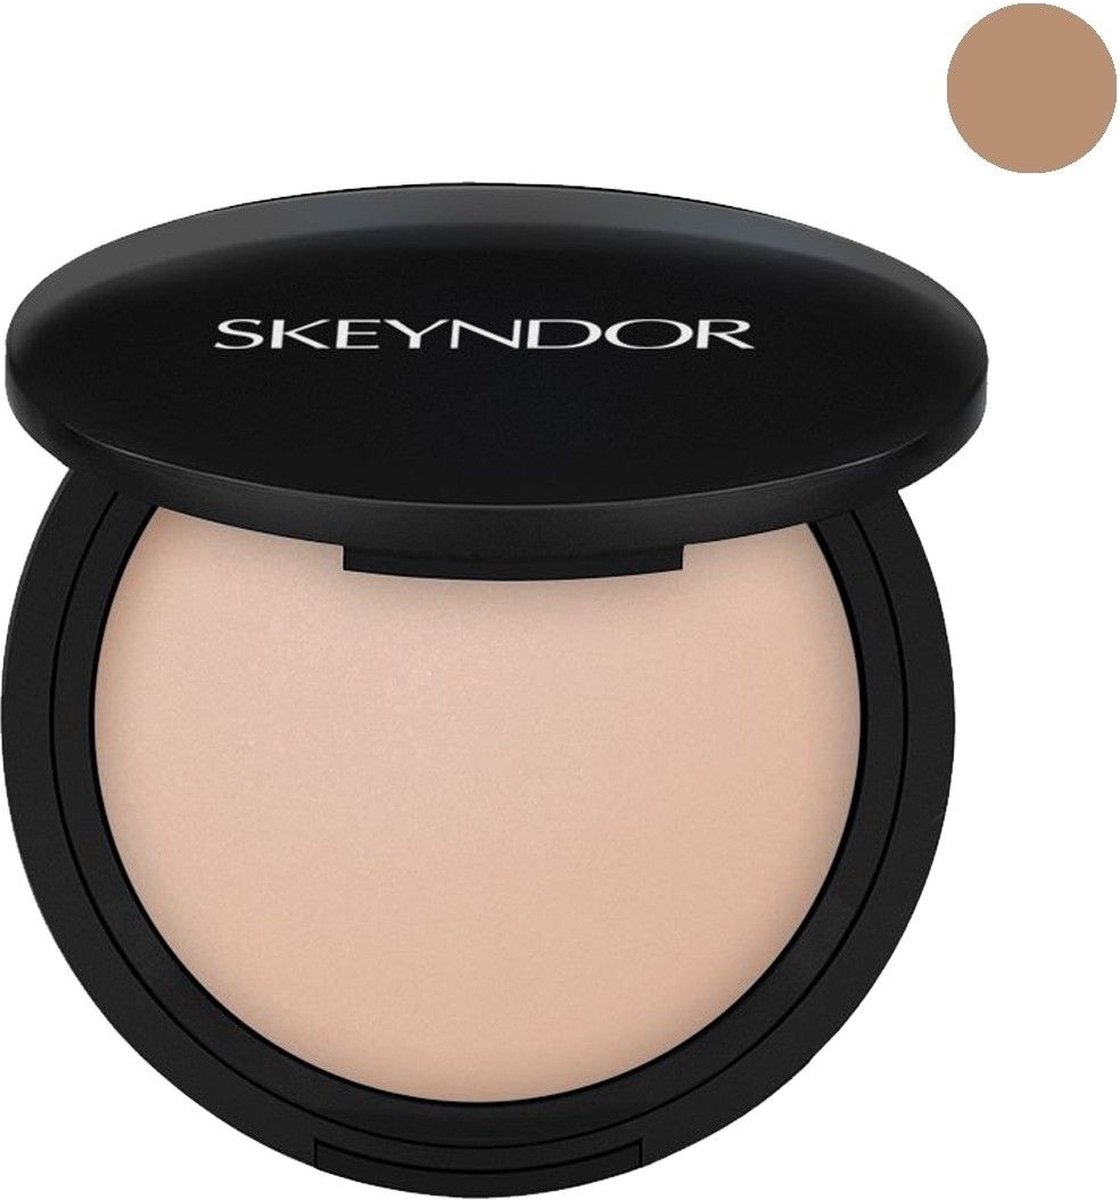 Skeyndor Make-up Make-up - 4,24 G - Make-up Voor Een Normale Huid